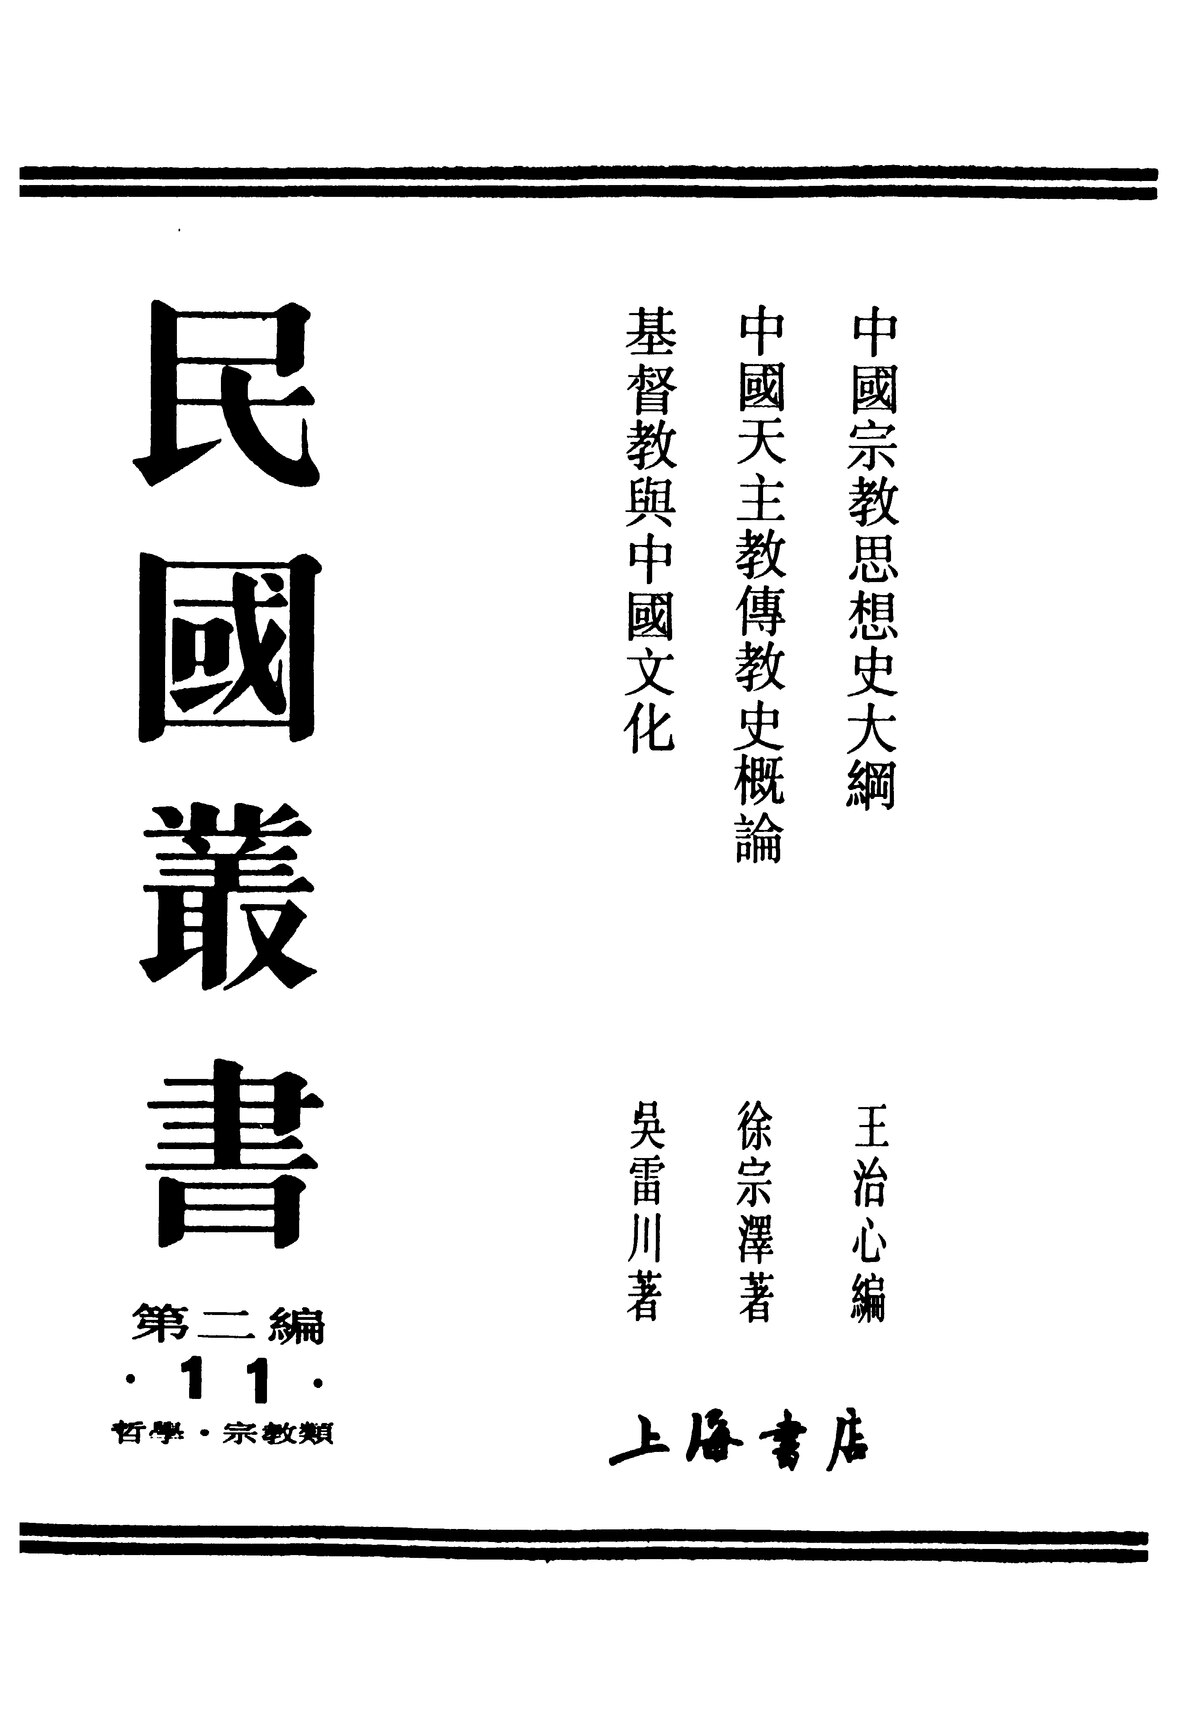 File:CADAL07000507 中國天主教傳教史概論.djvu - Wikimedia Commons